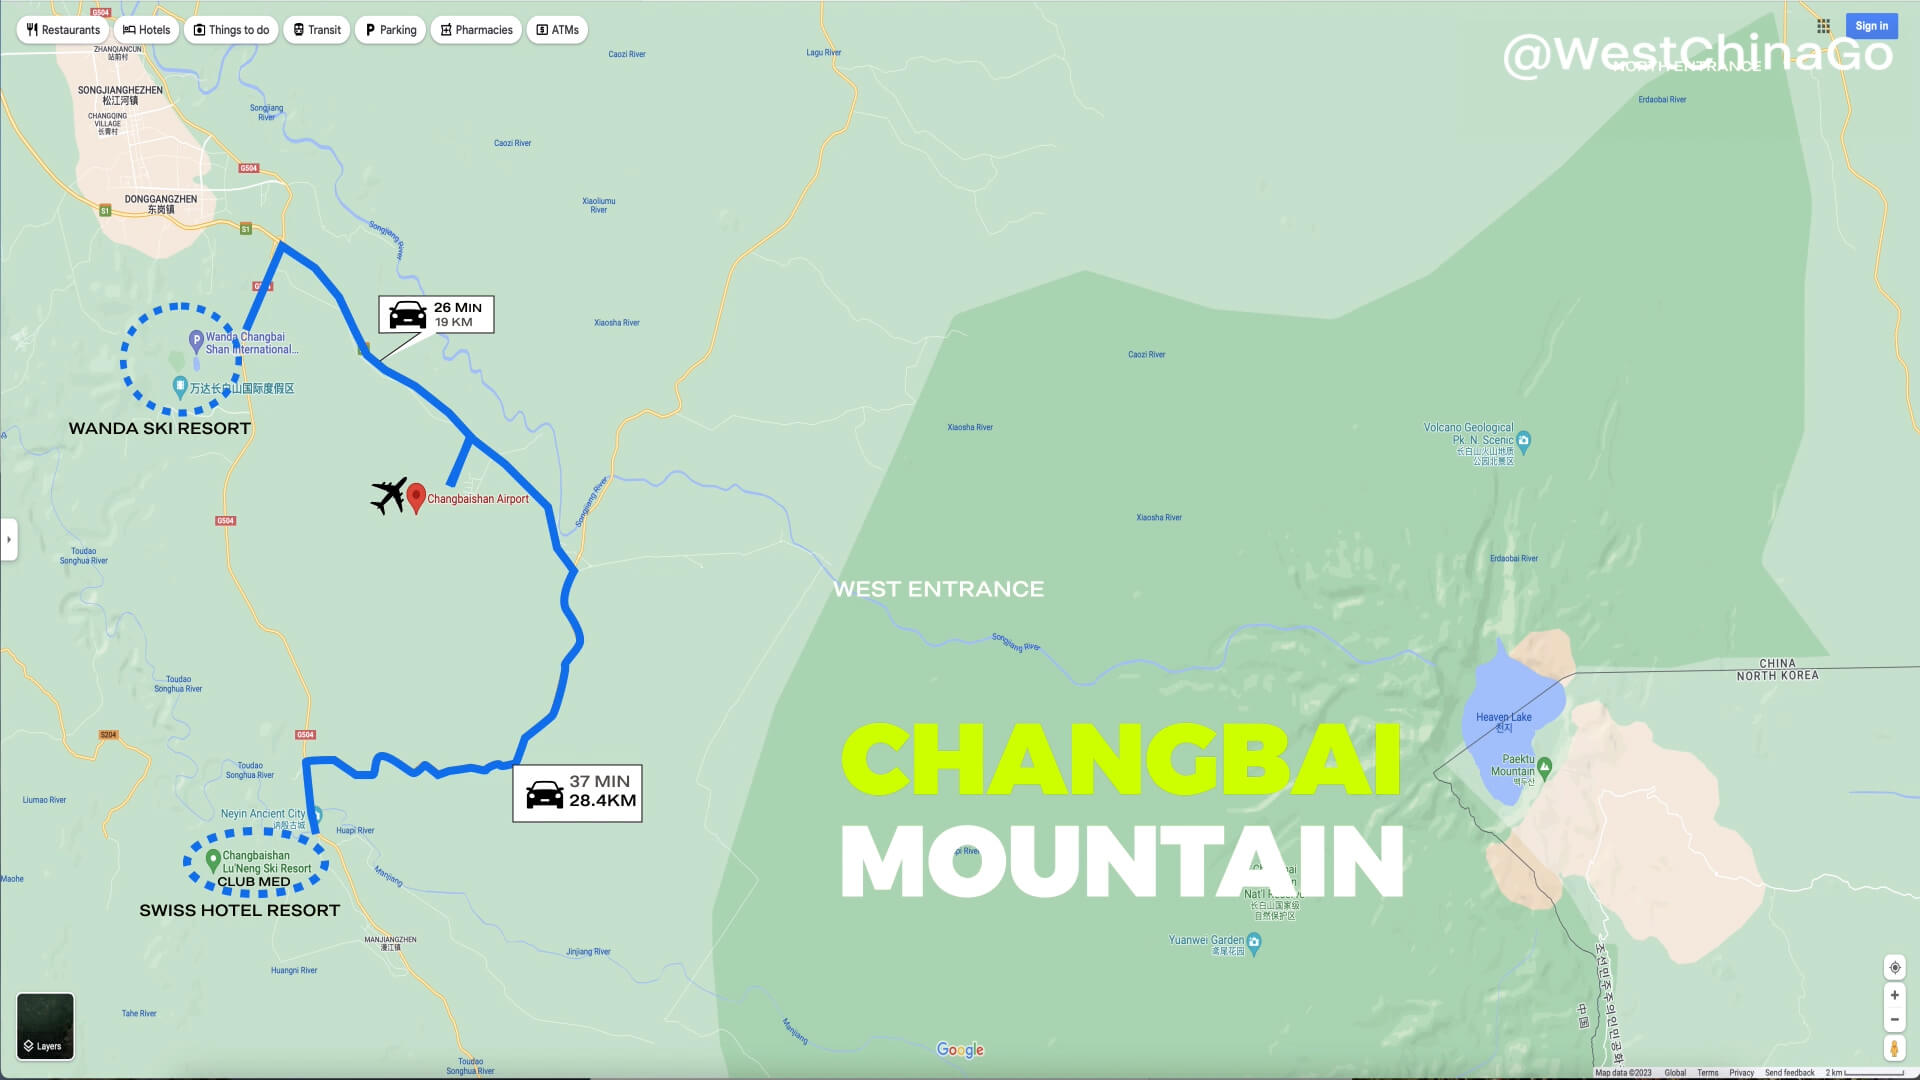 changbai mountain tourist map